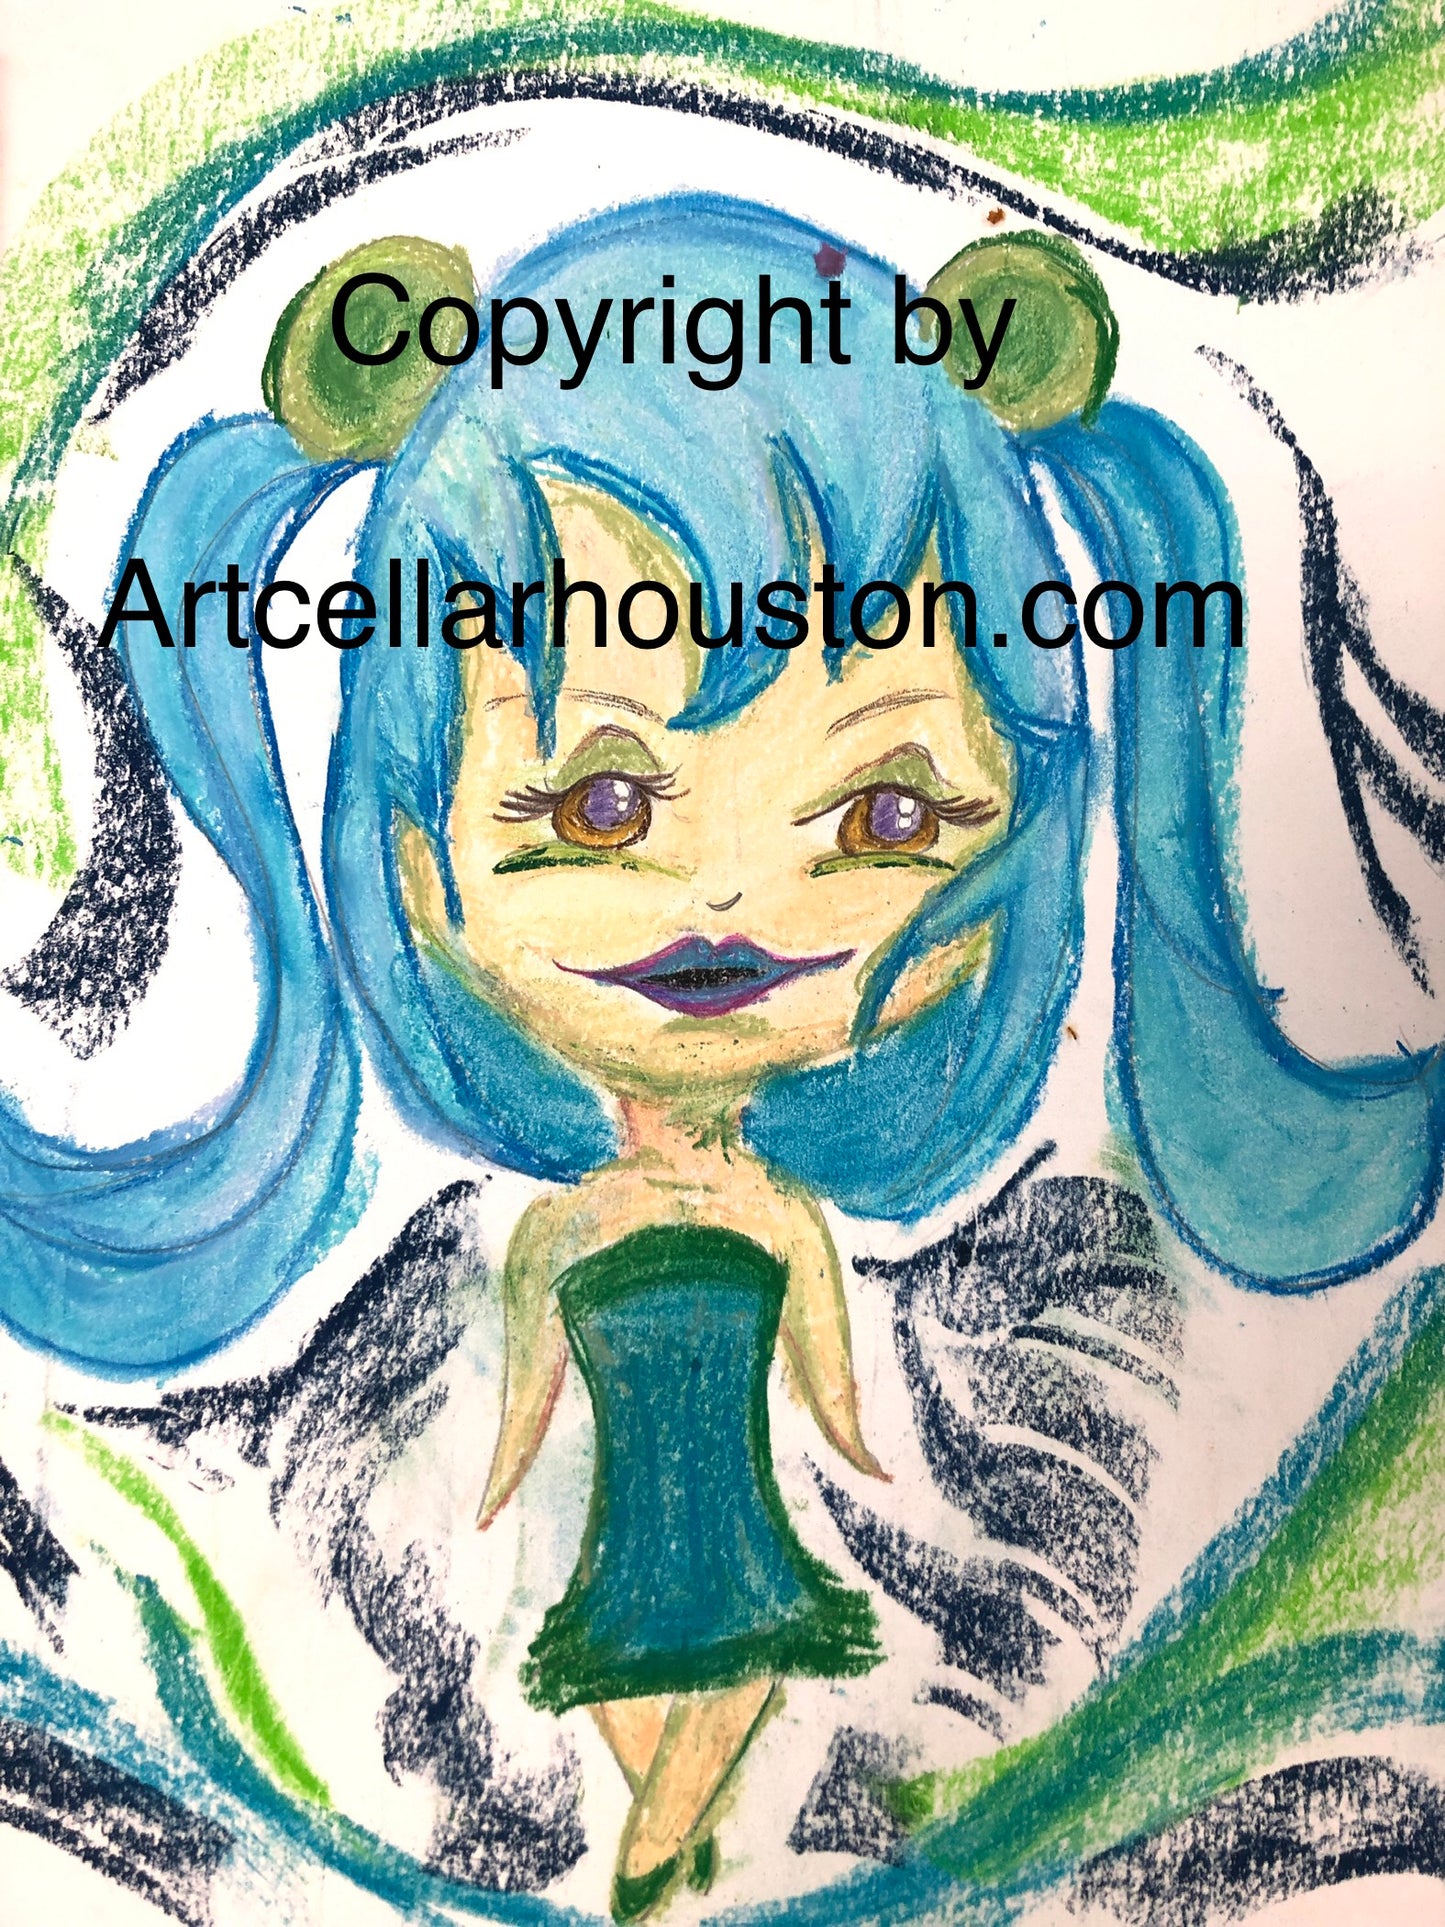 Wed, Mar 22nd, 4-6p Kids Paint: "Anime Characters" Public Houston Art Class